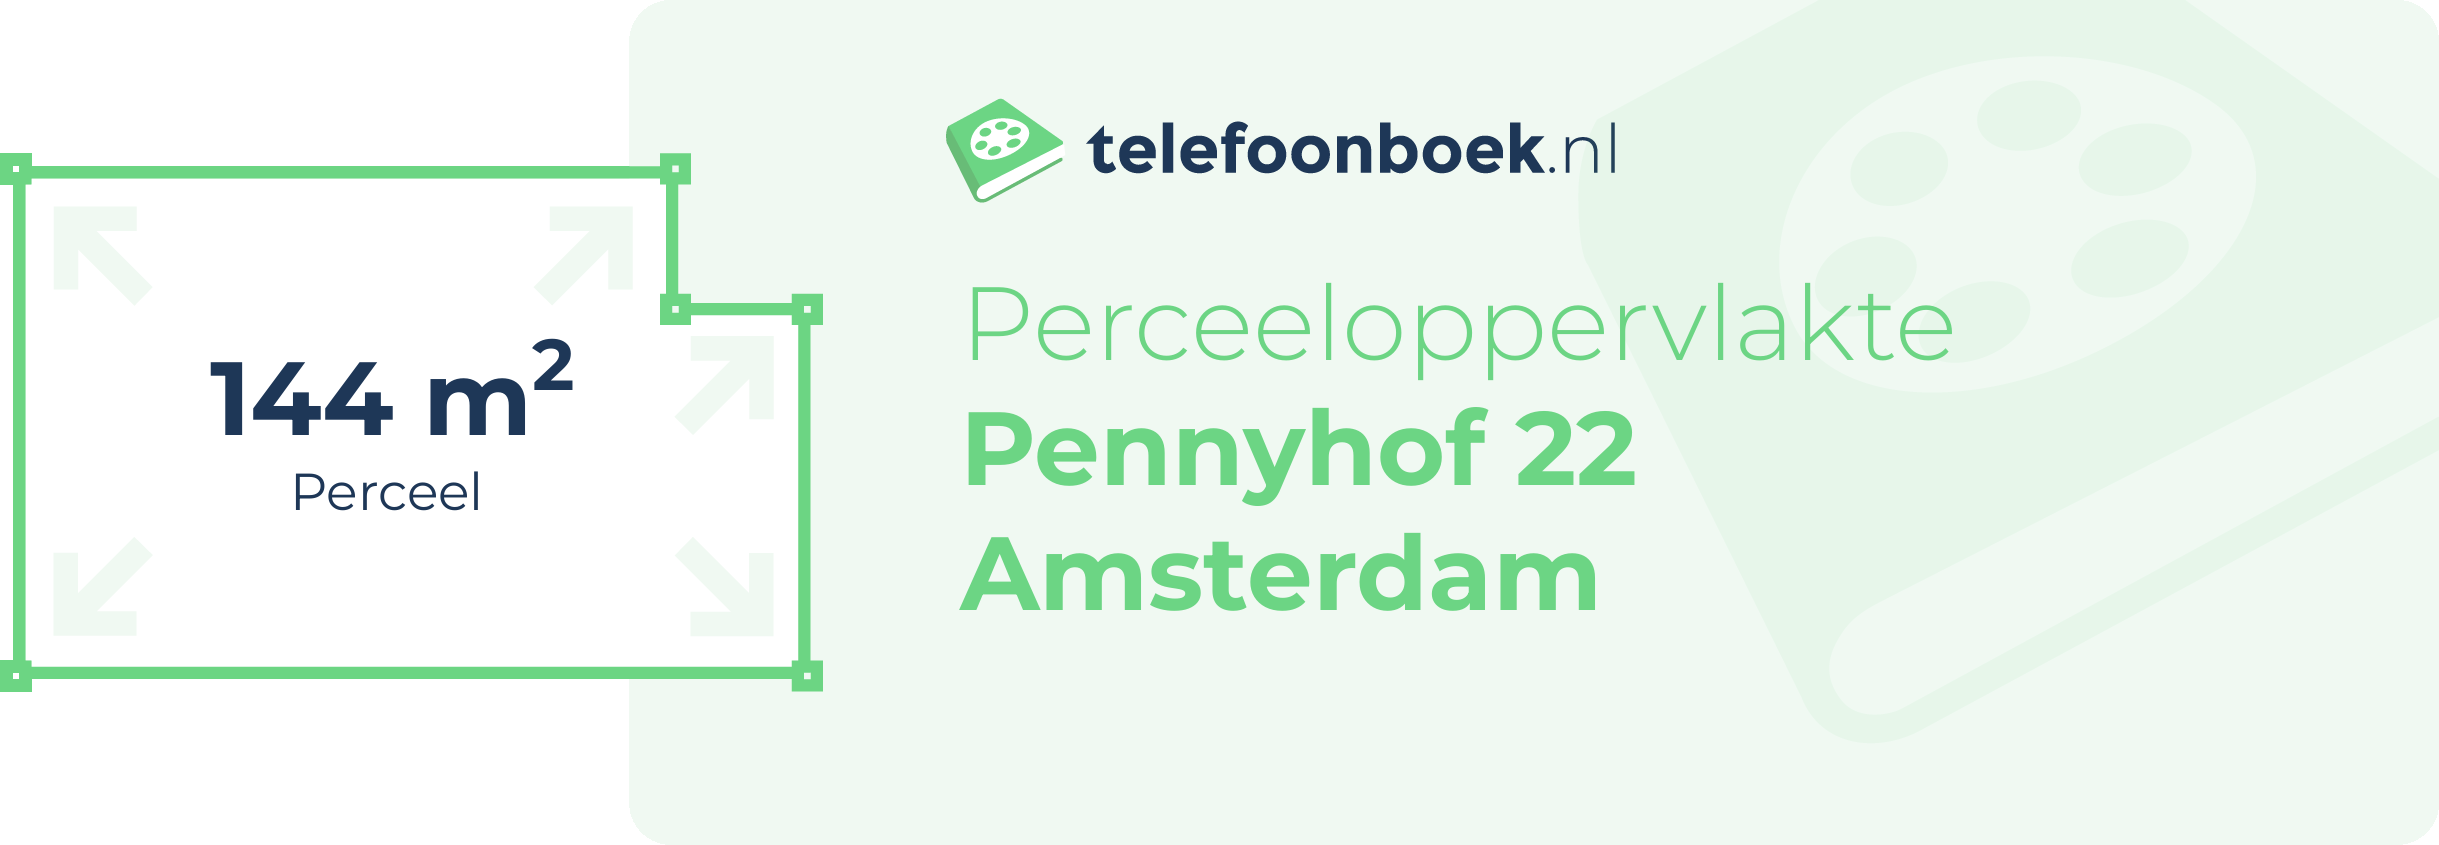 Perceeloppervlakte Pennyhof 22 Amsterdam